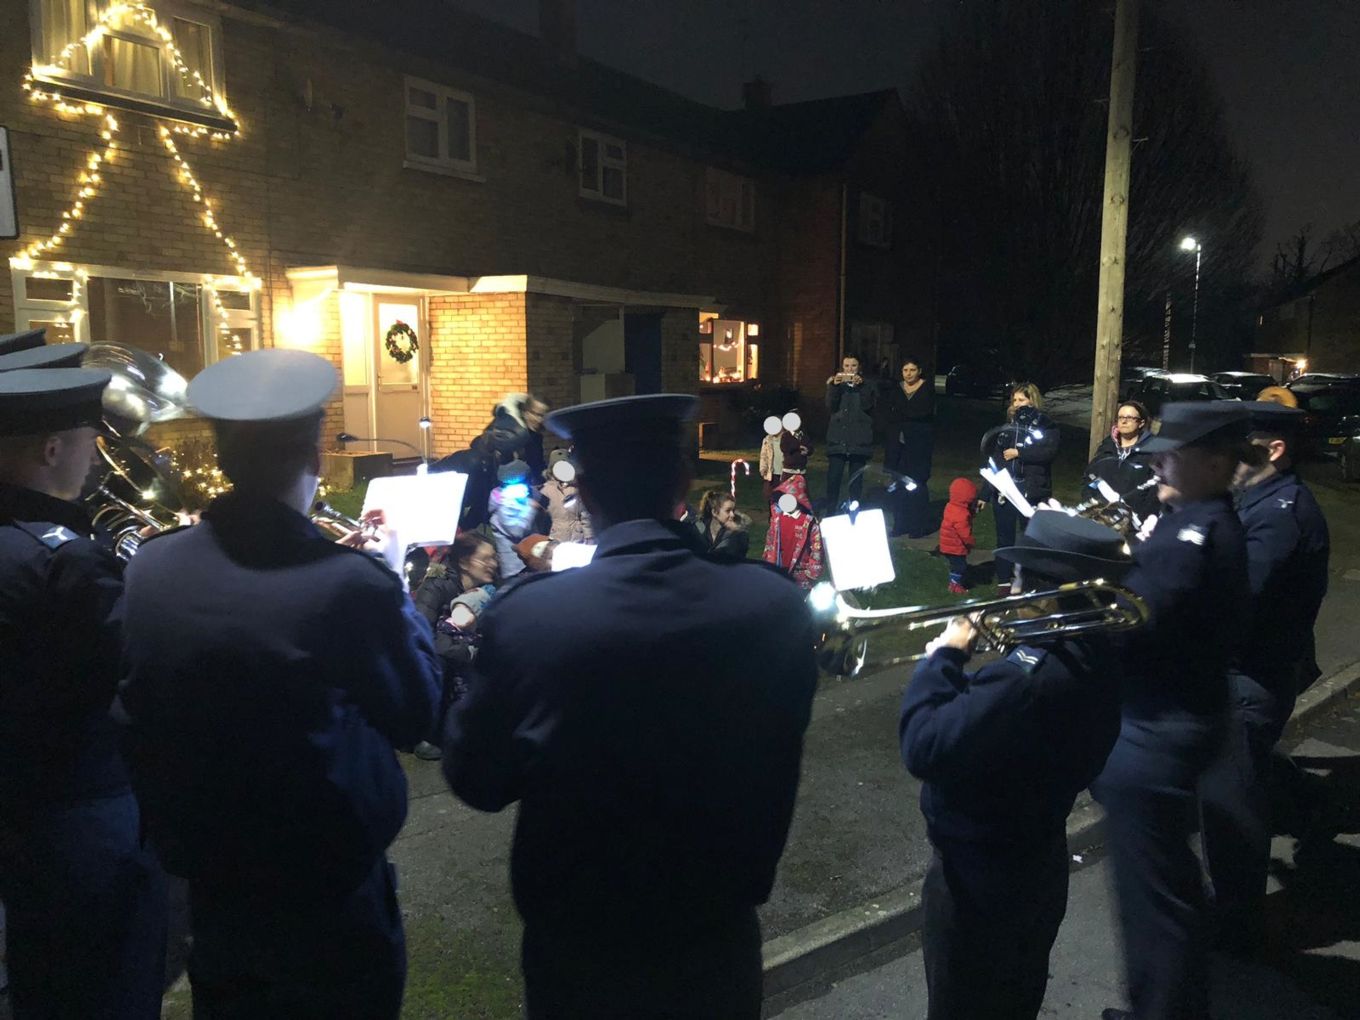 RAF Musicians play Christmas carols to families.